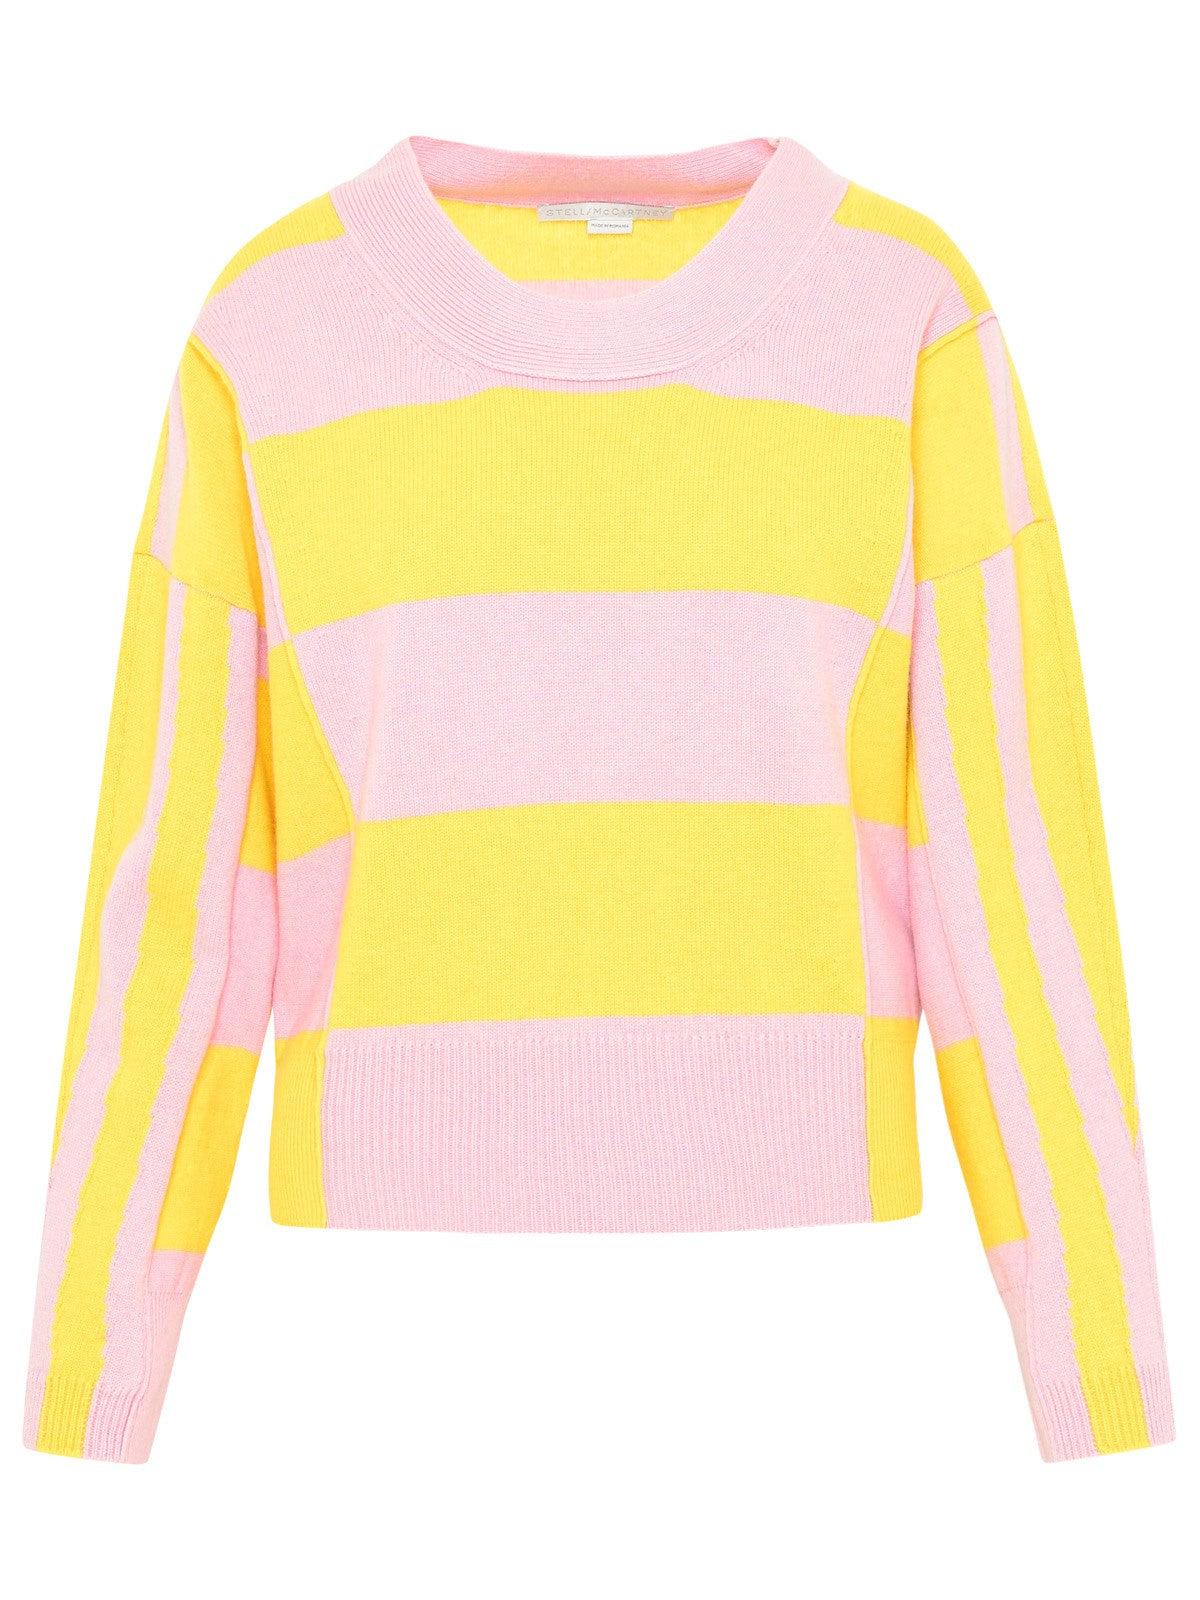 Stella McCartney Colorblock Crewneck Sweater